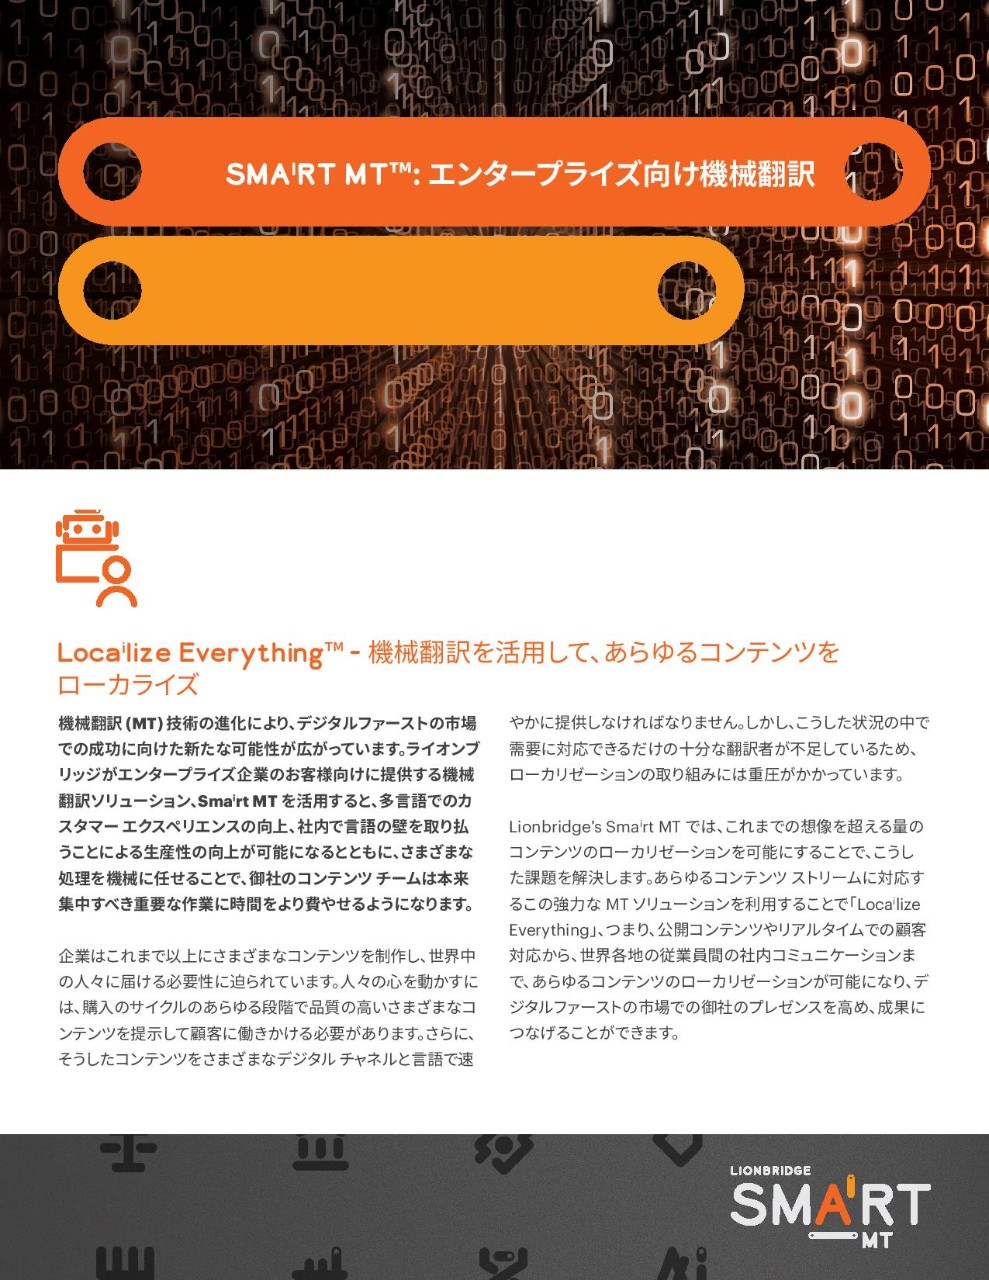 「Smart MT™: エンタープライズ向け機械翻訳」ソリューション概要の表紙